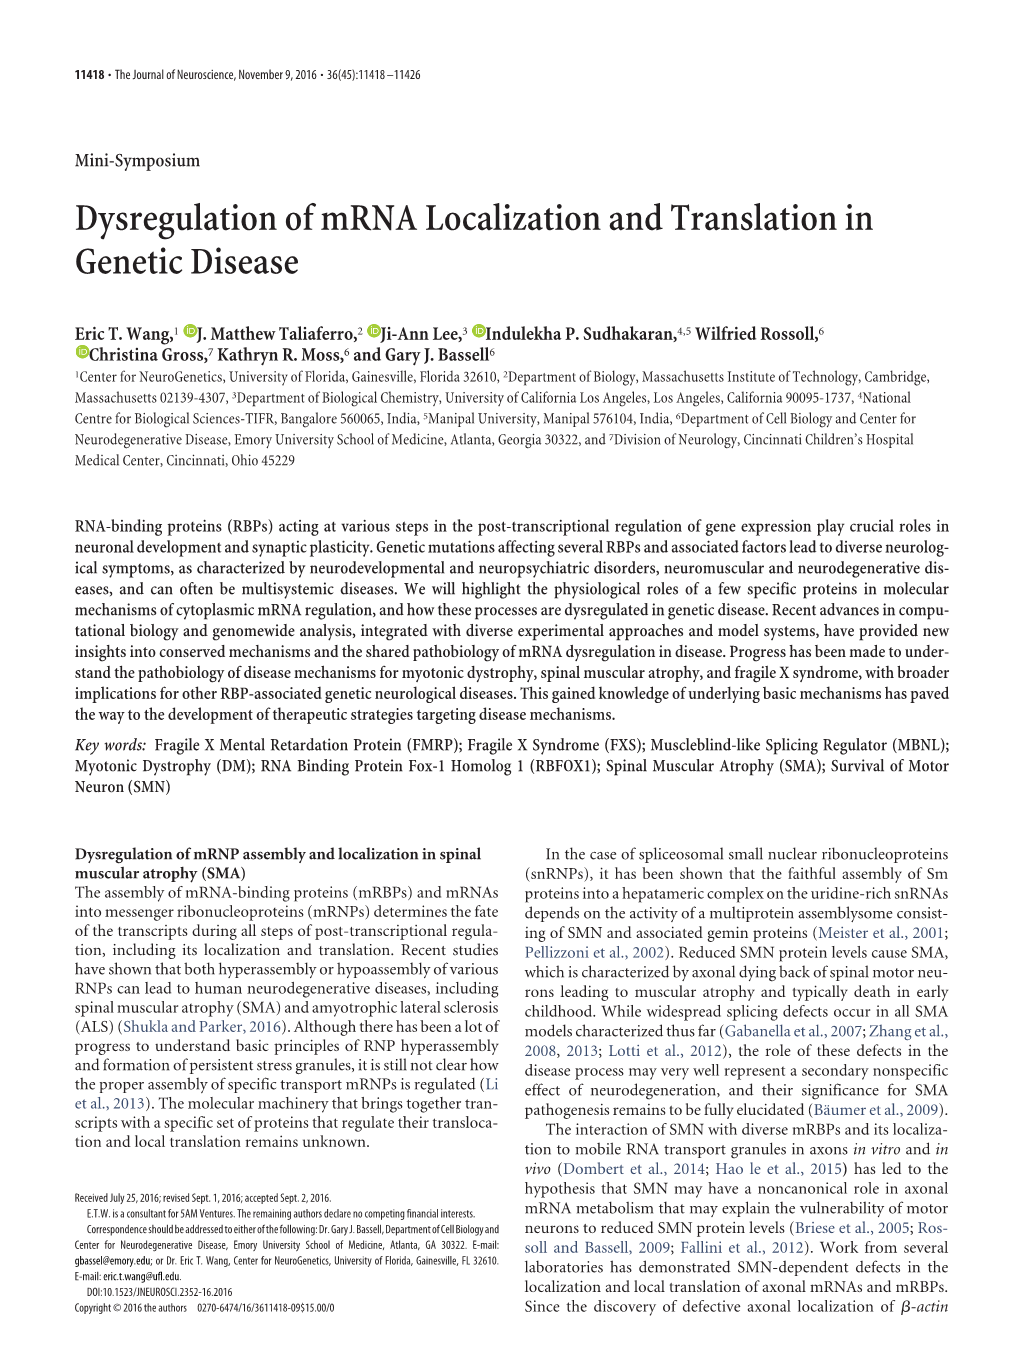 Dysregulation of Mrna Localization and Translation in Genetic Disease